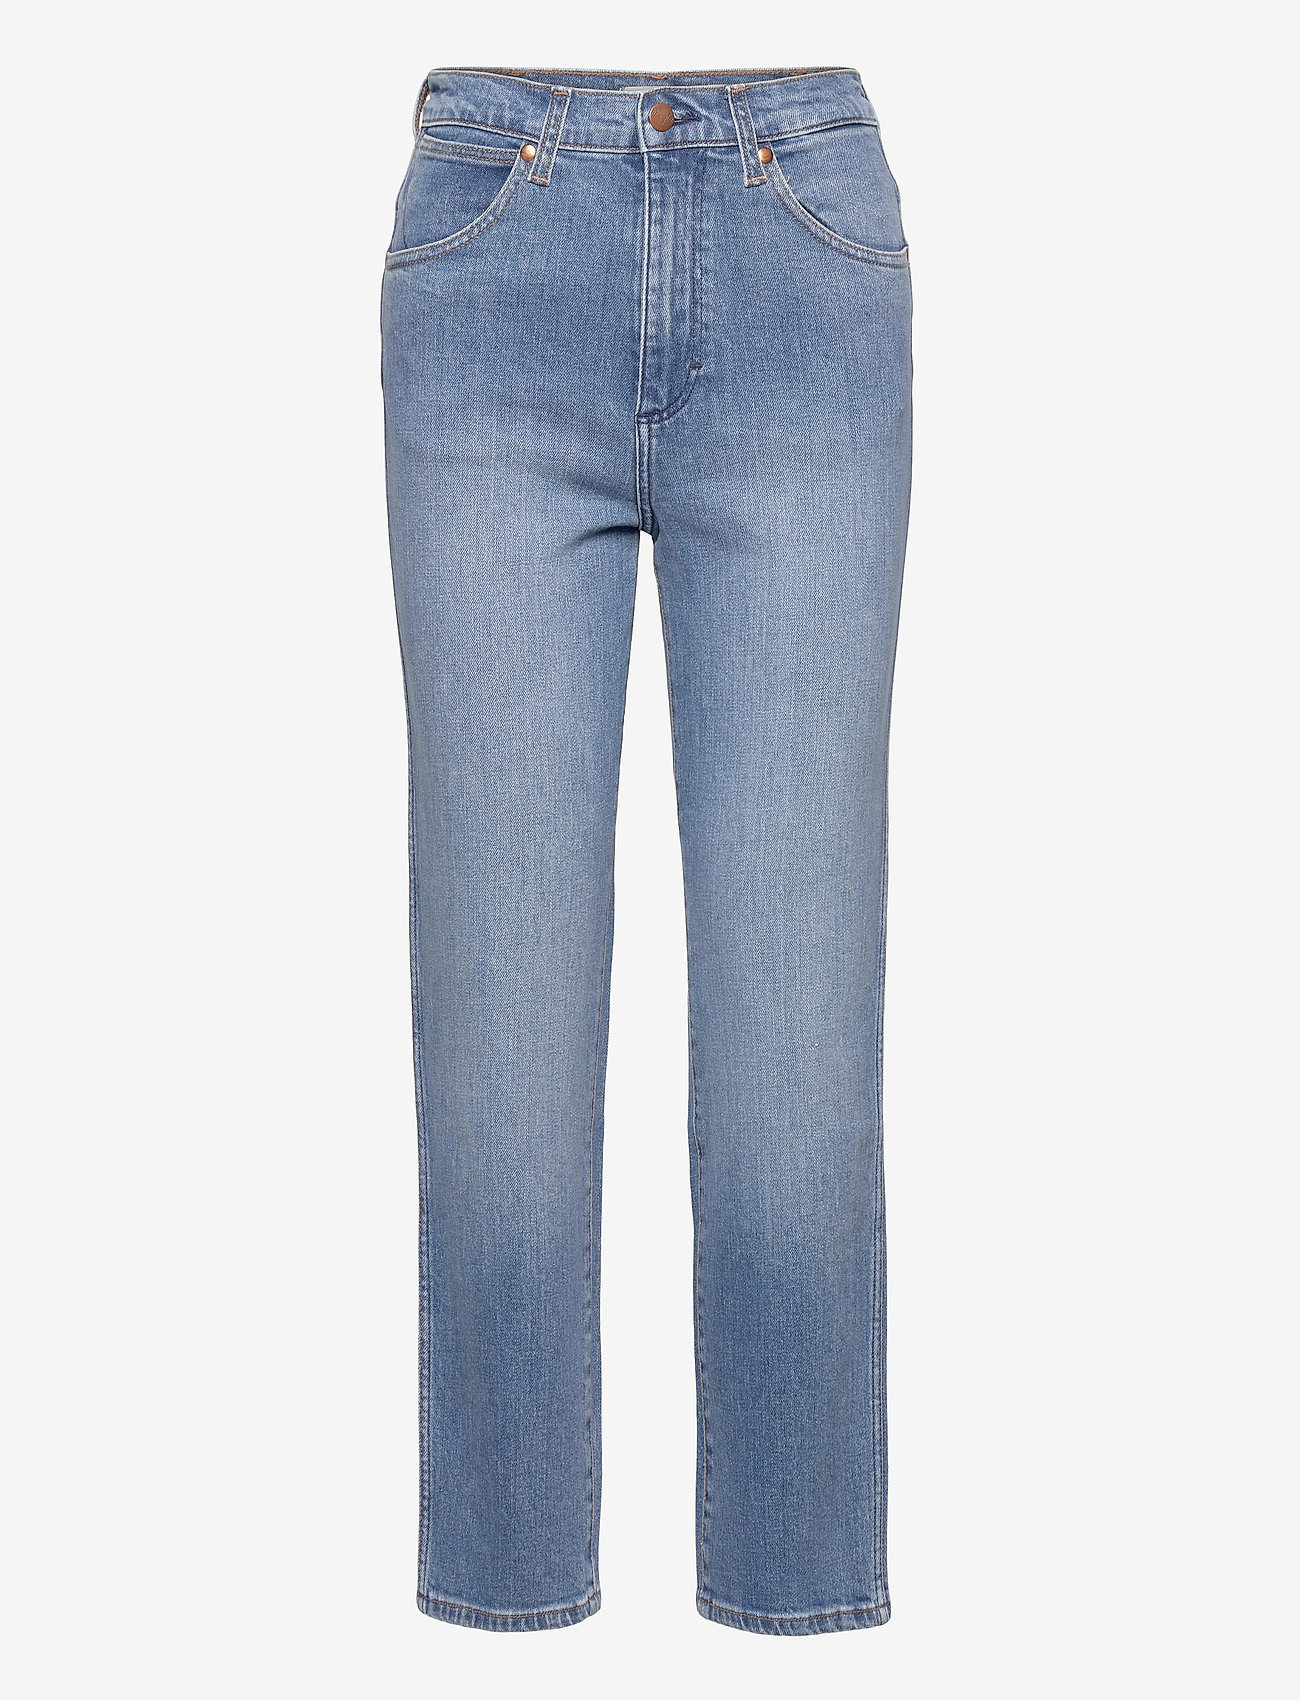 Wrangler - WILD WEST - straight jeans - mid blue - 0